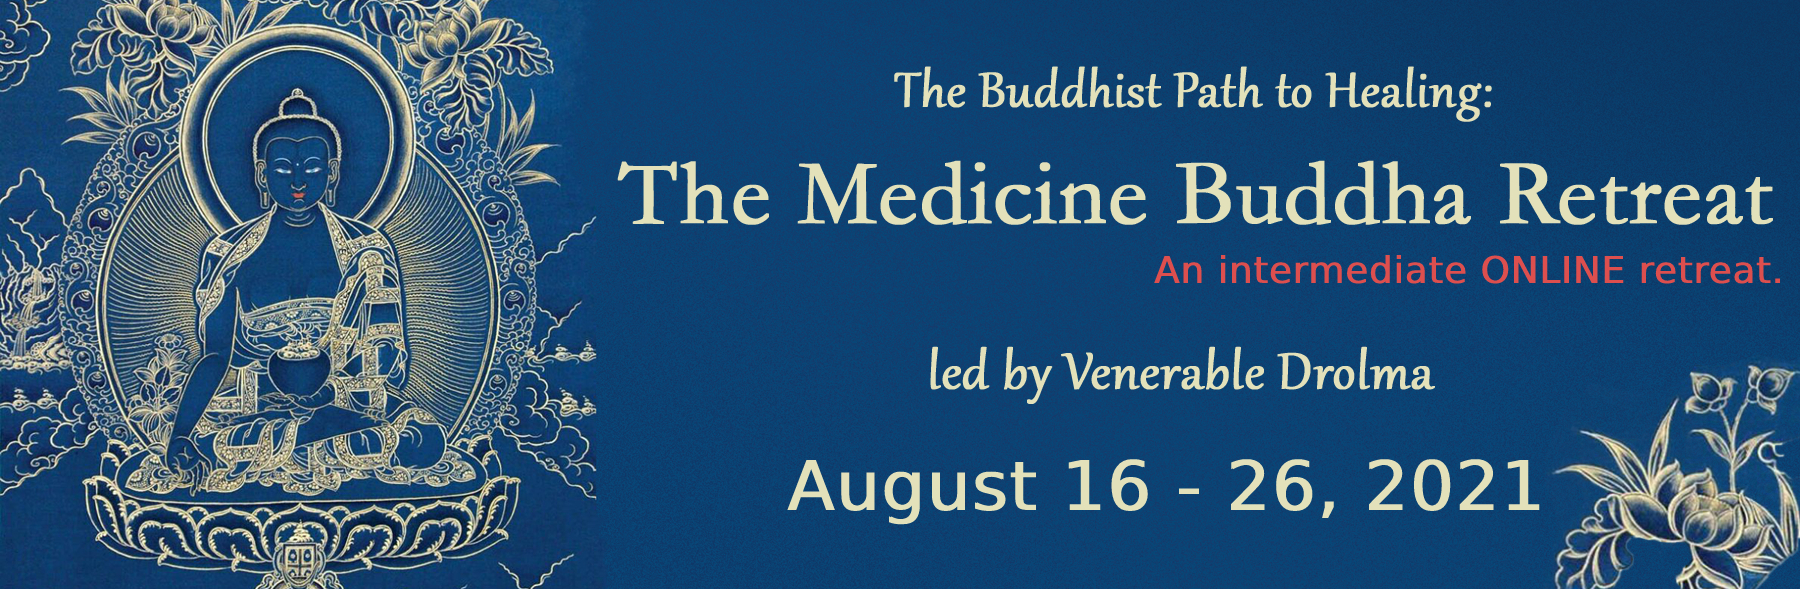 The Buddhist Path to Healing: The Medicine Buddha Retreat